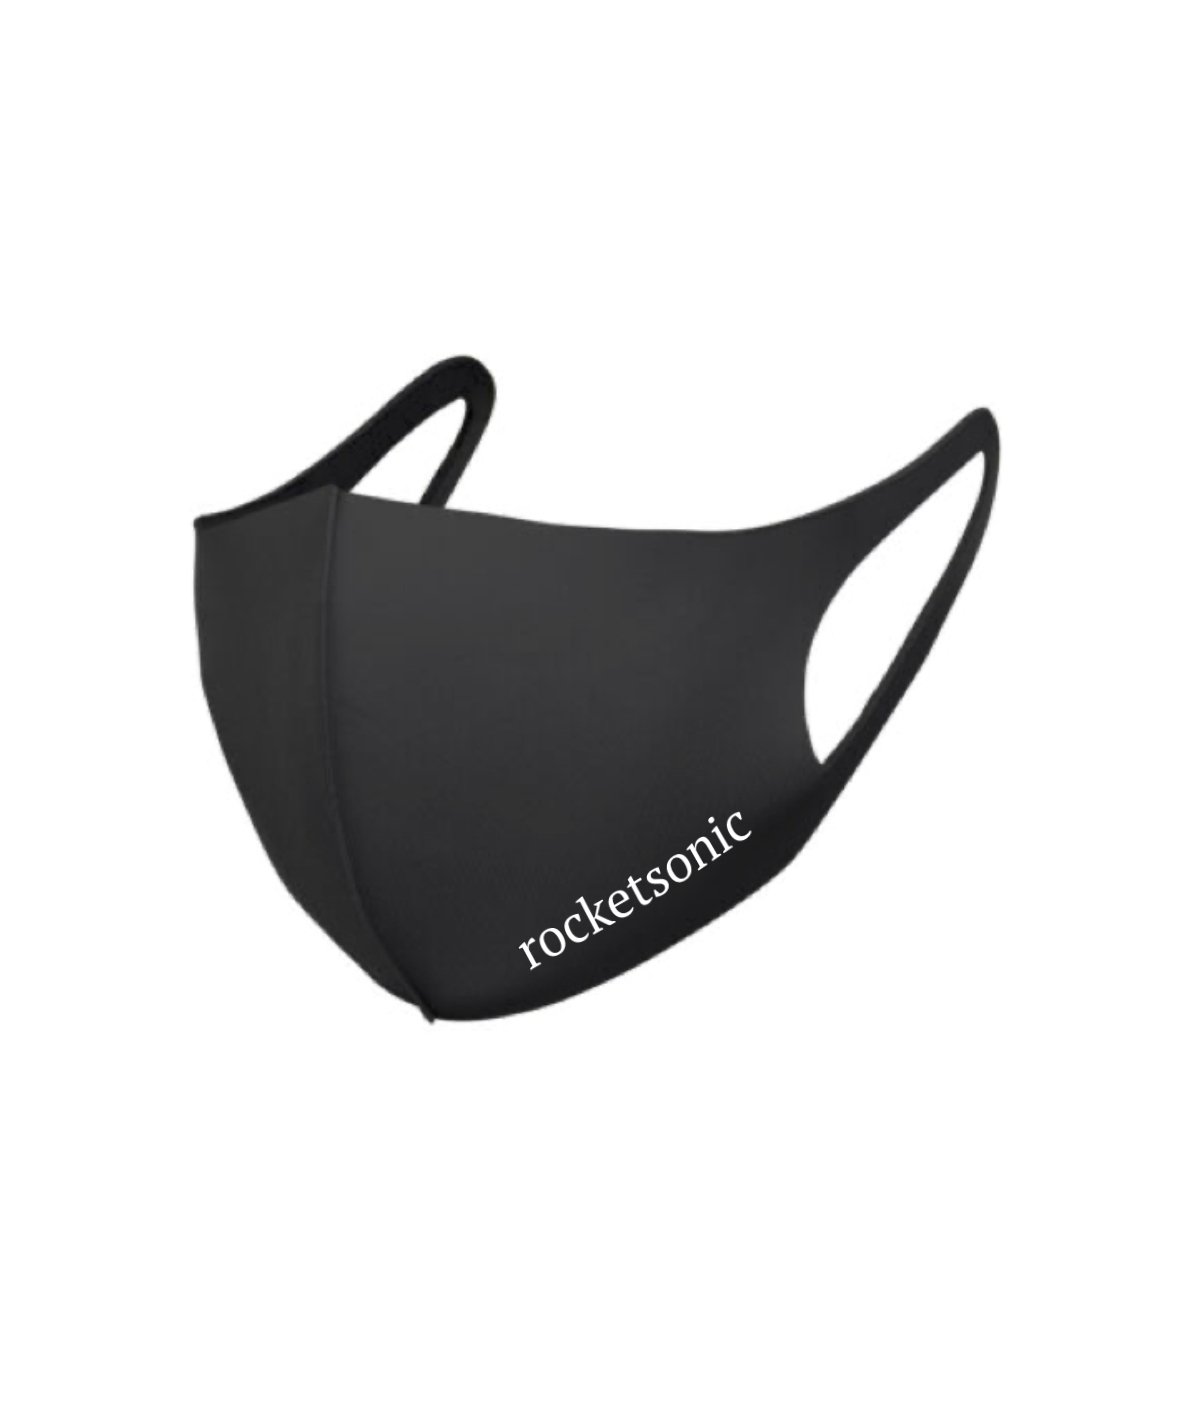 Image of Rocketsonic 'Stretch Fabric' Face Mask - Black